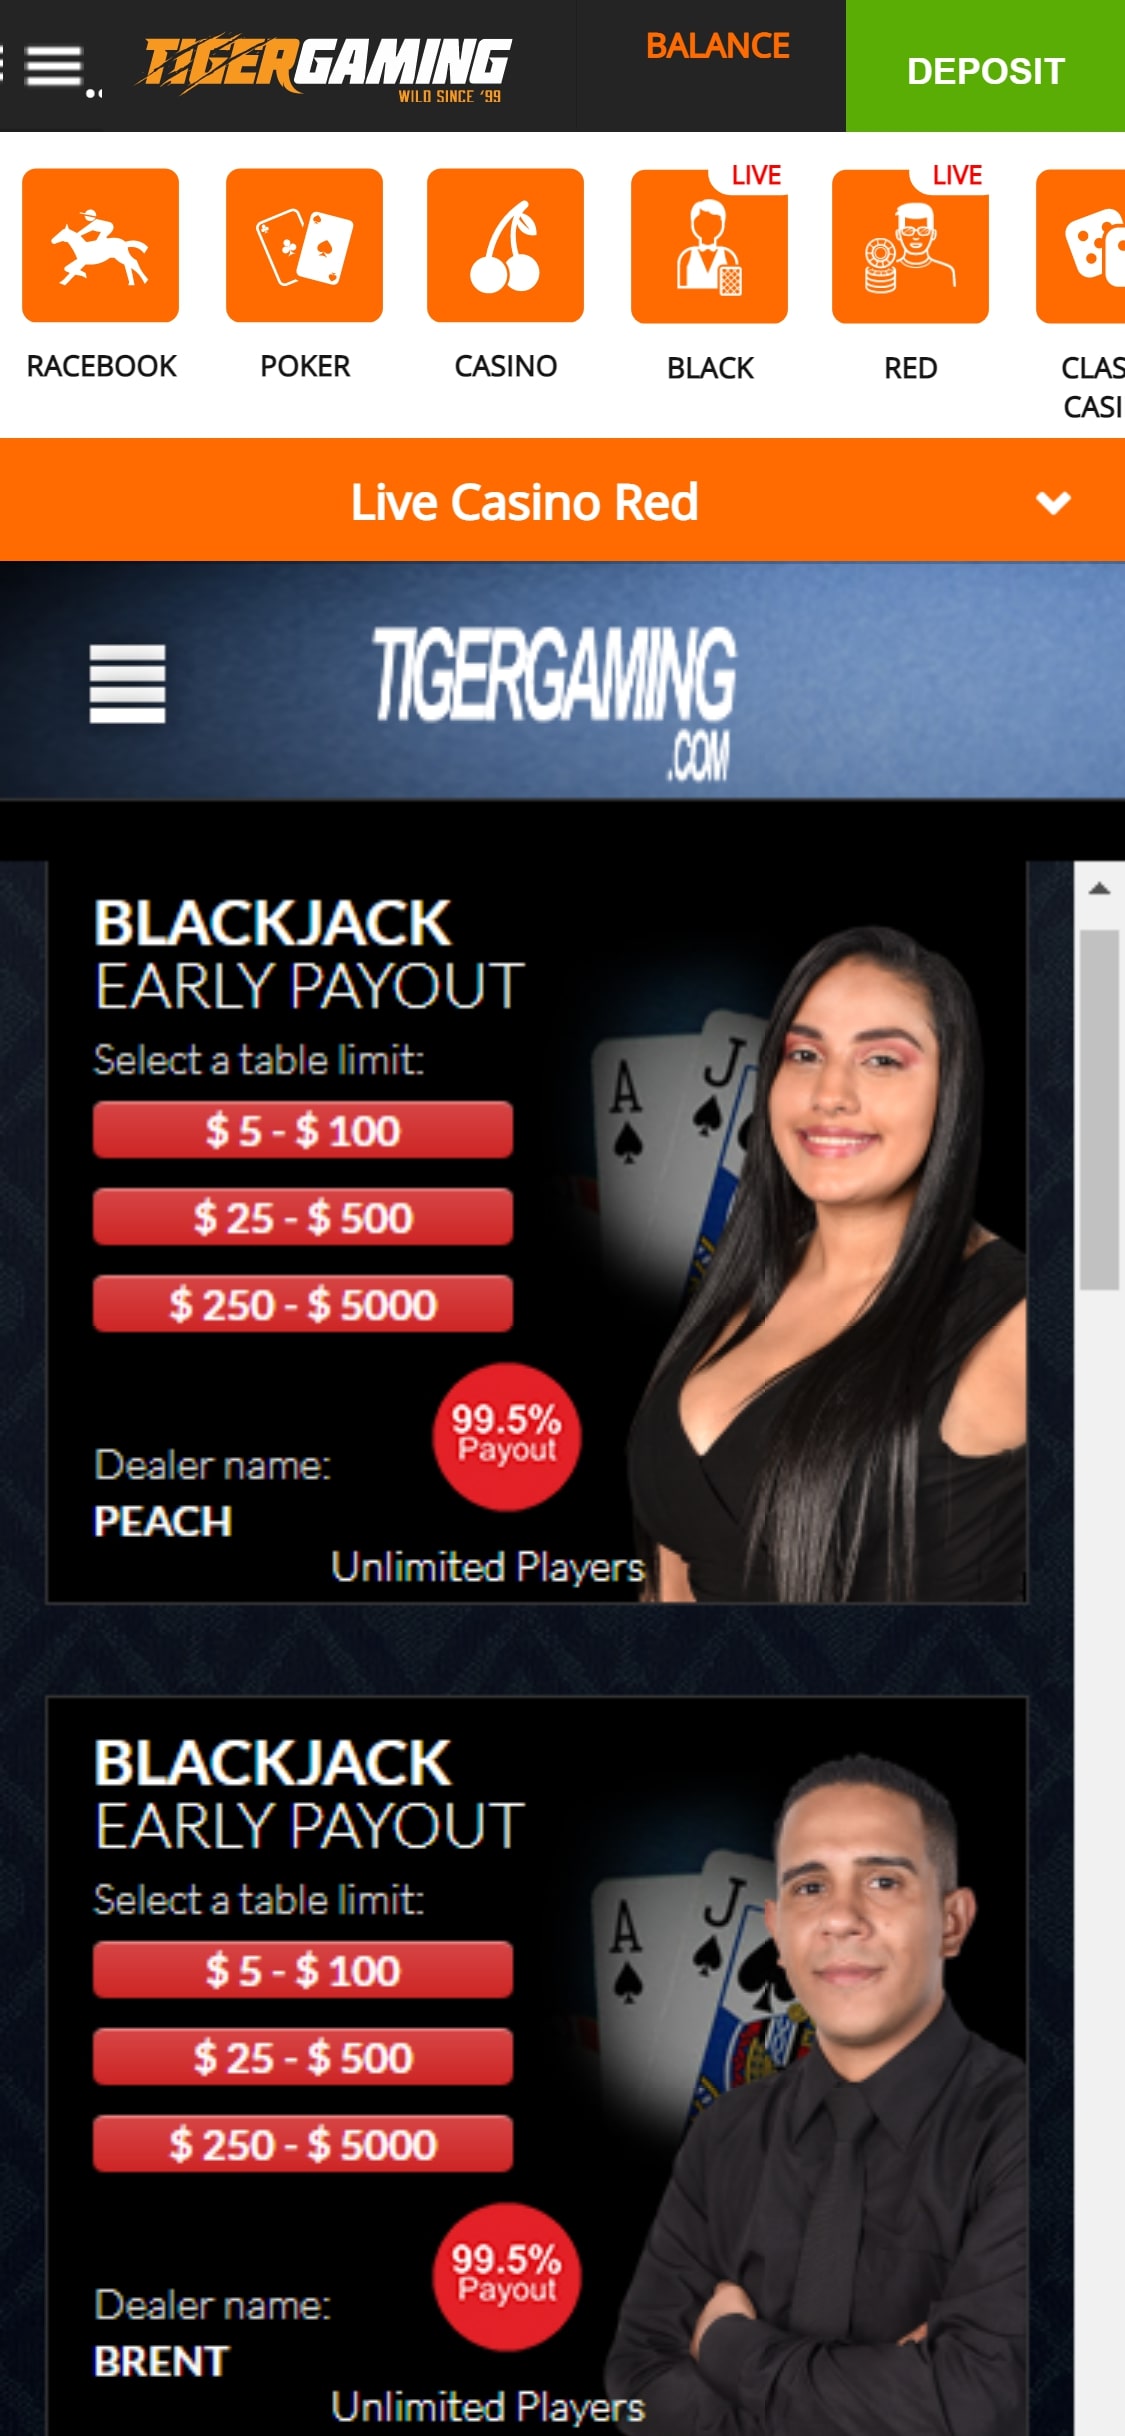 TigerGaming Casino Mobile Live Dealer Games Review